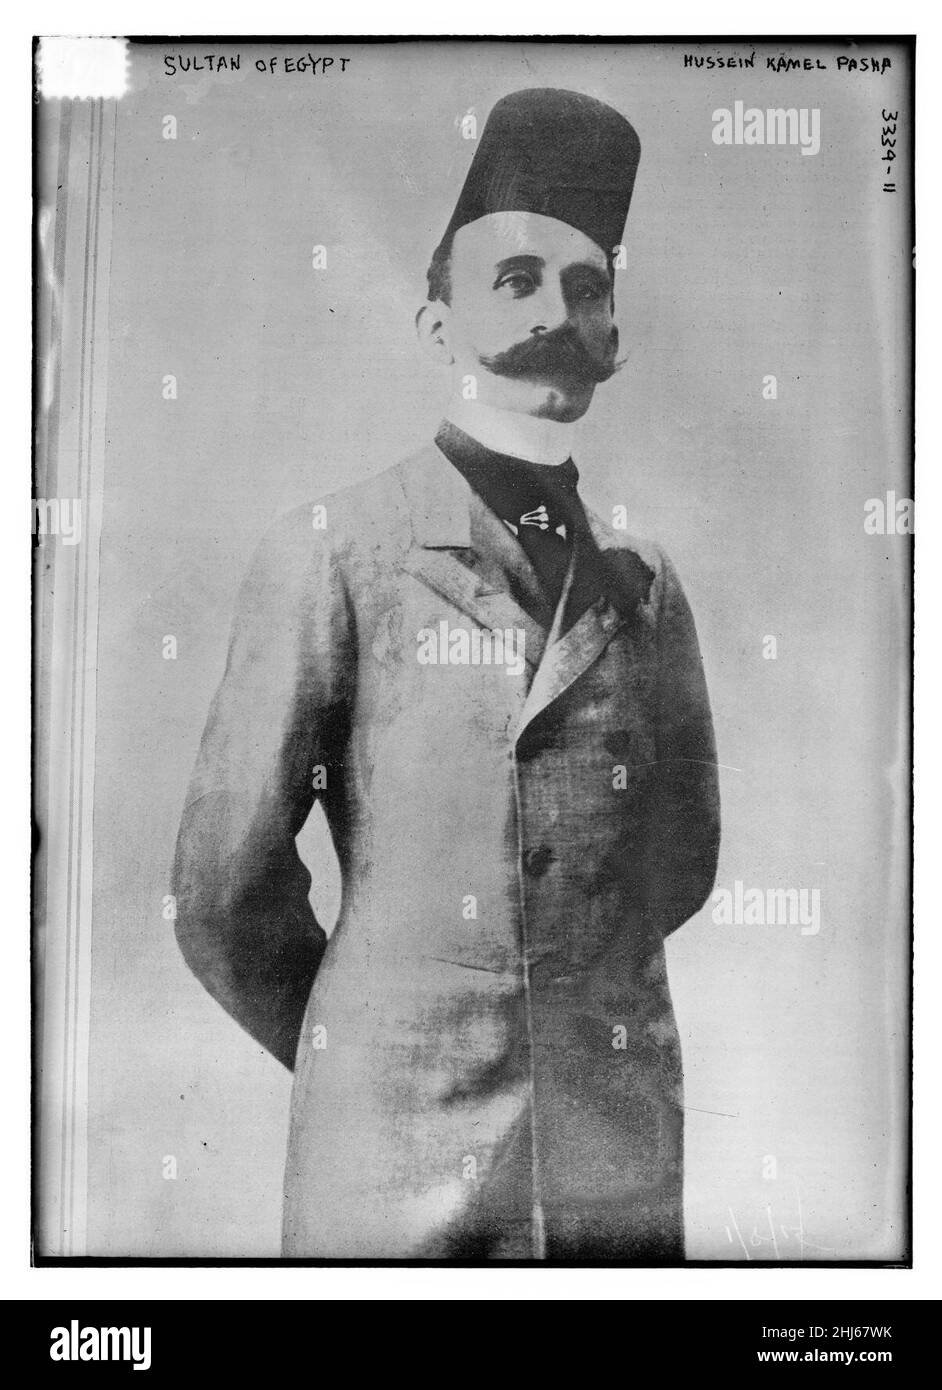 Sultano d'Egitto - Hussein Kamel Pasha Foto Stock